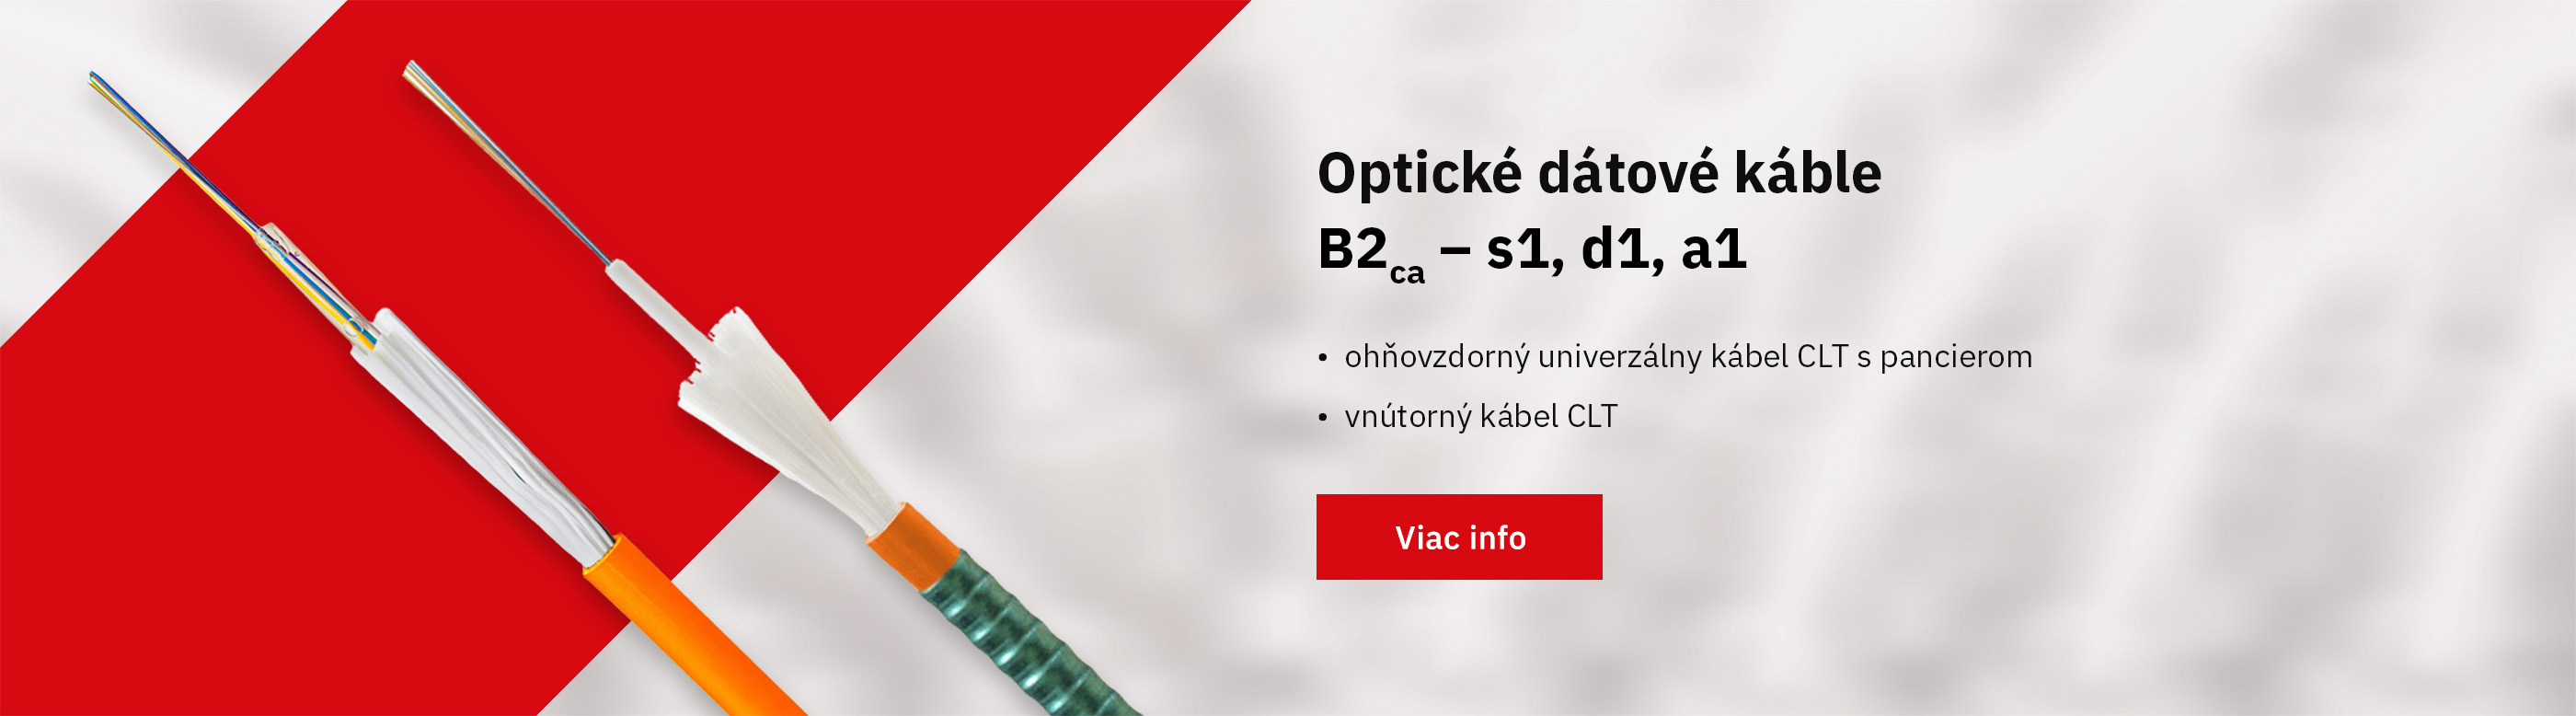 9396-opticke-datove-kable-2.jpg